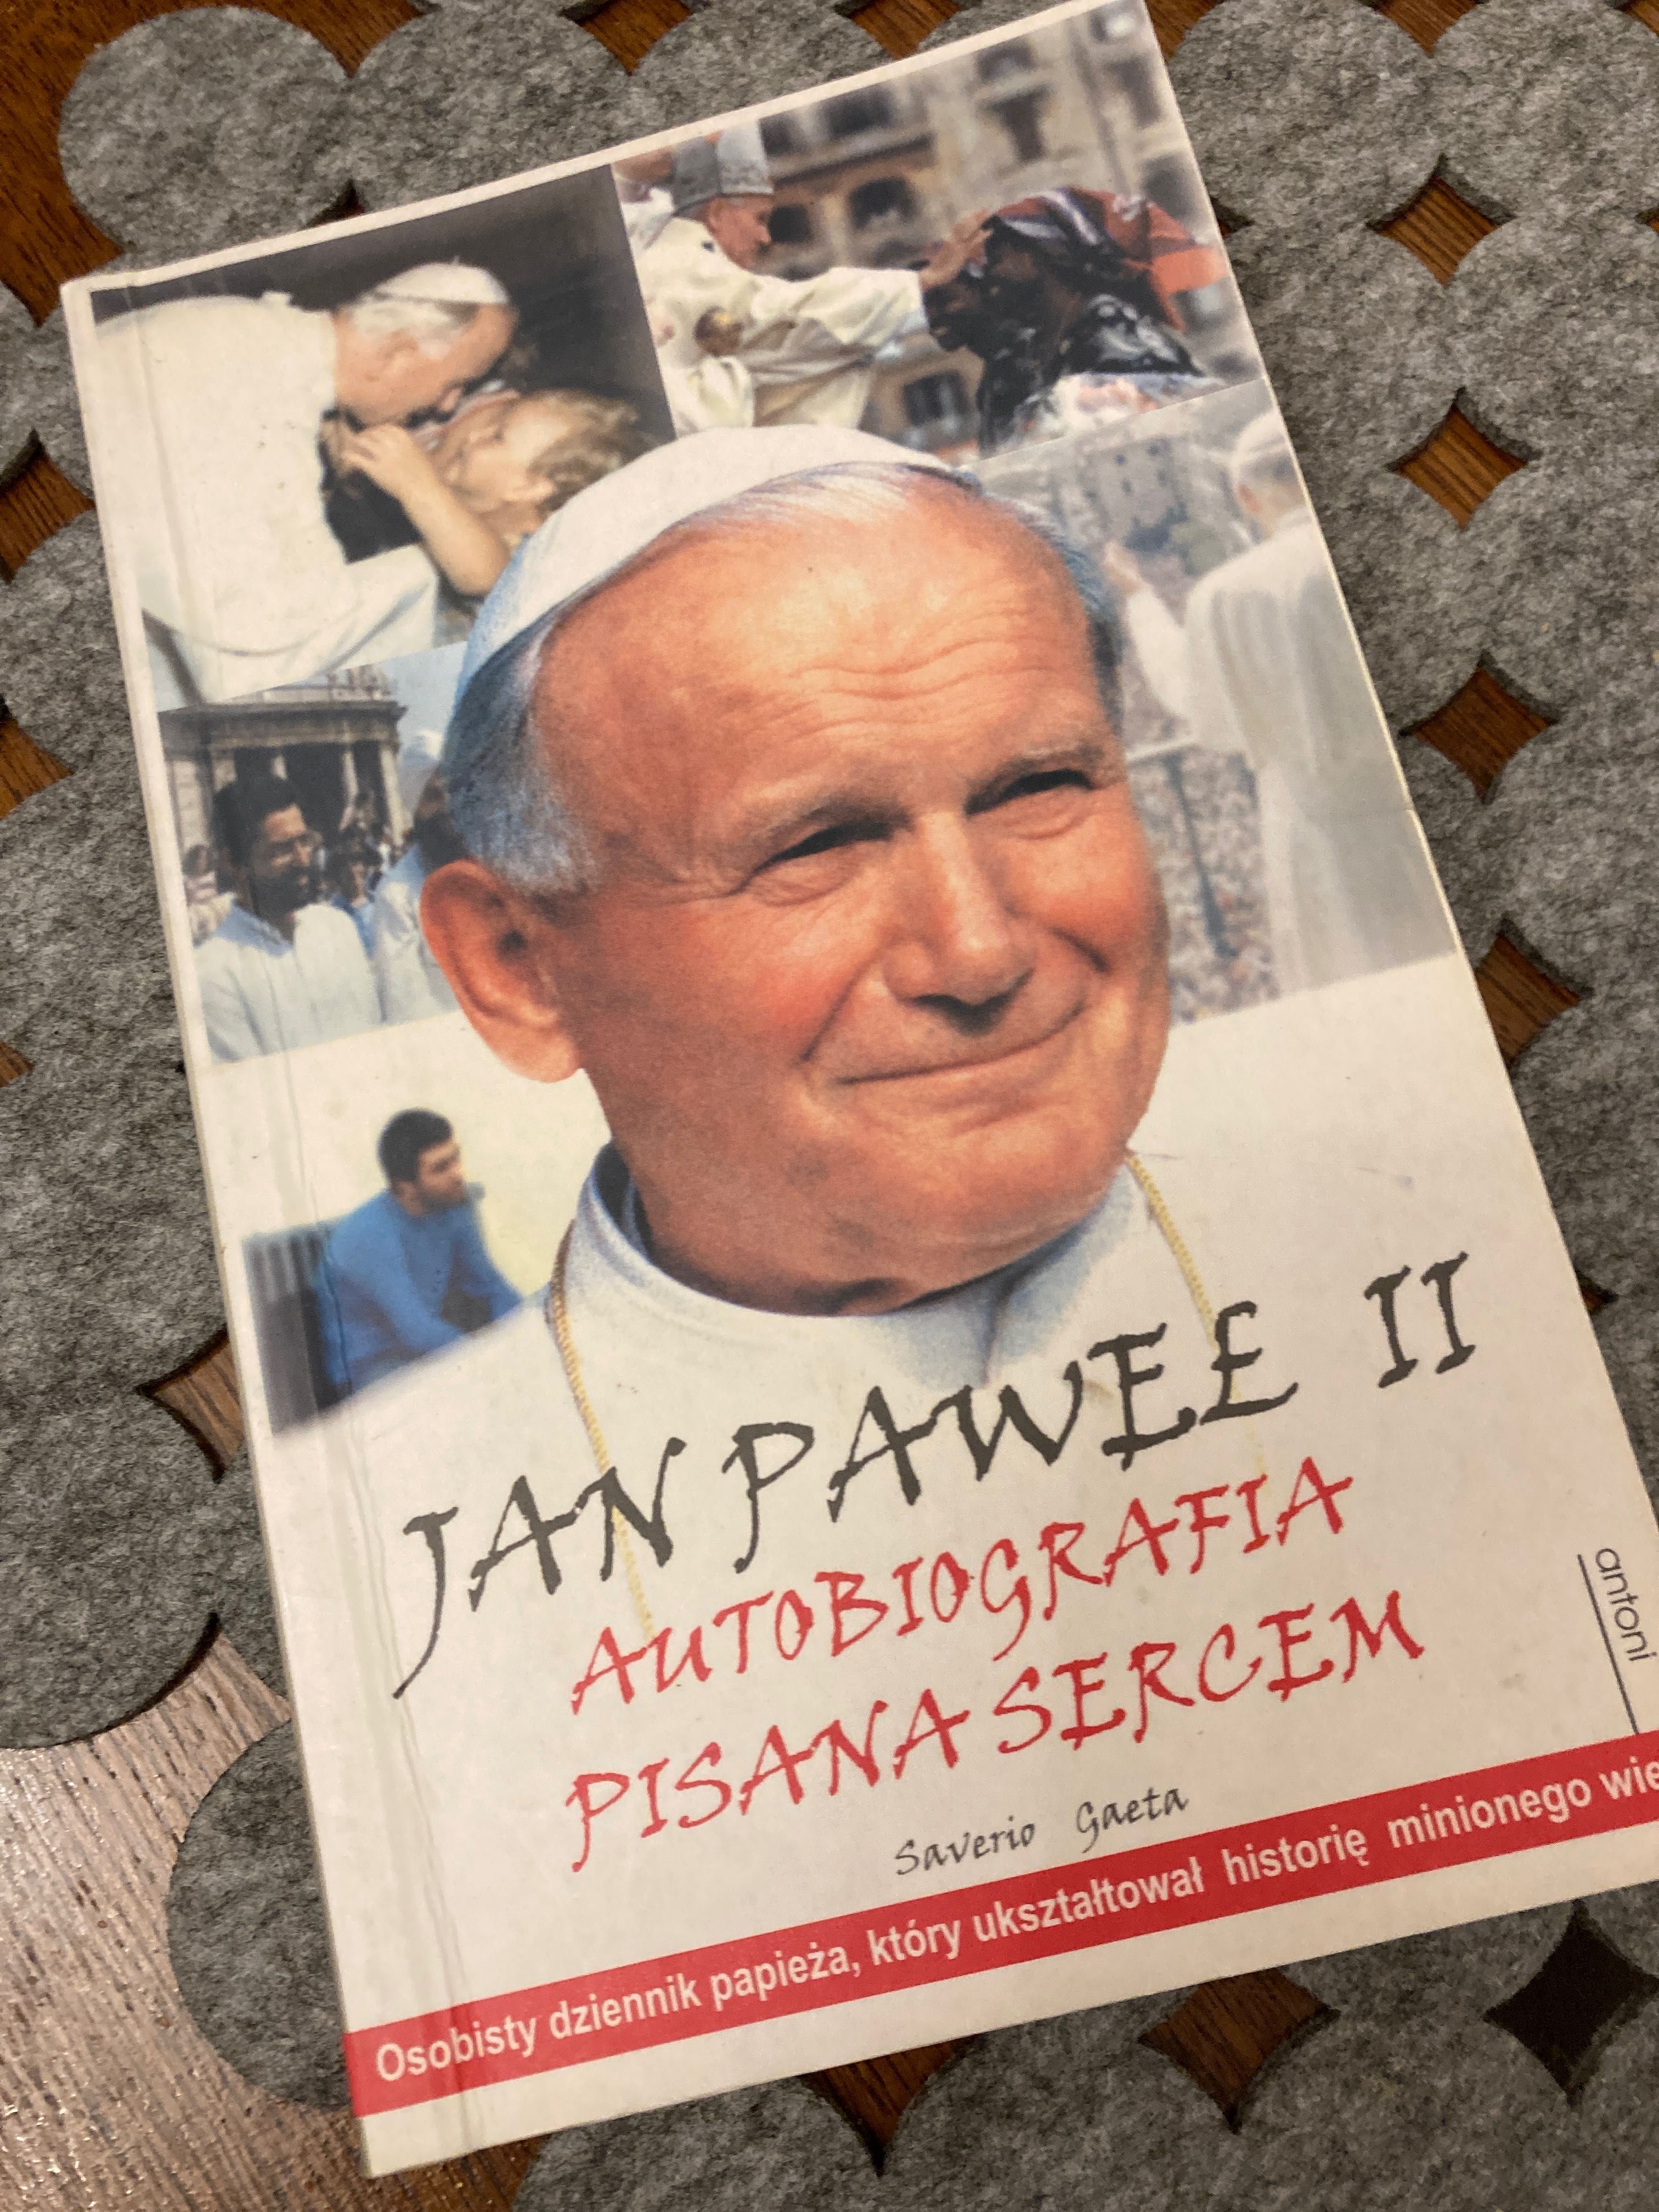 Jan Paweł II autobiografia pisana sercem Saverio Gaeta